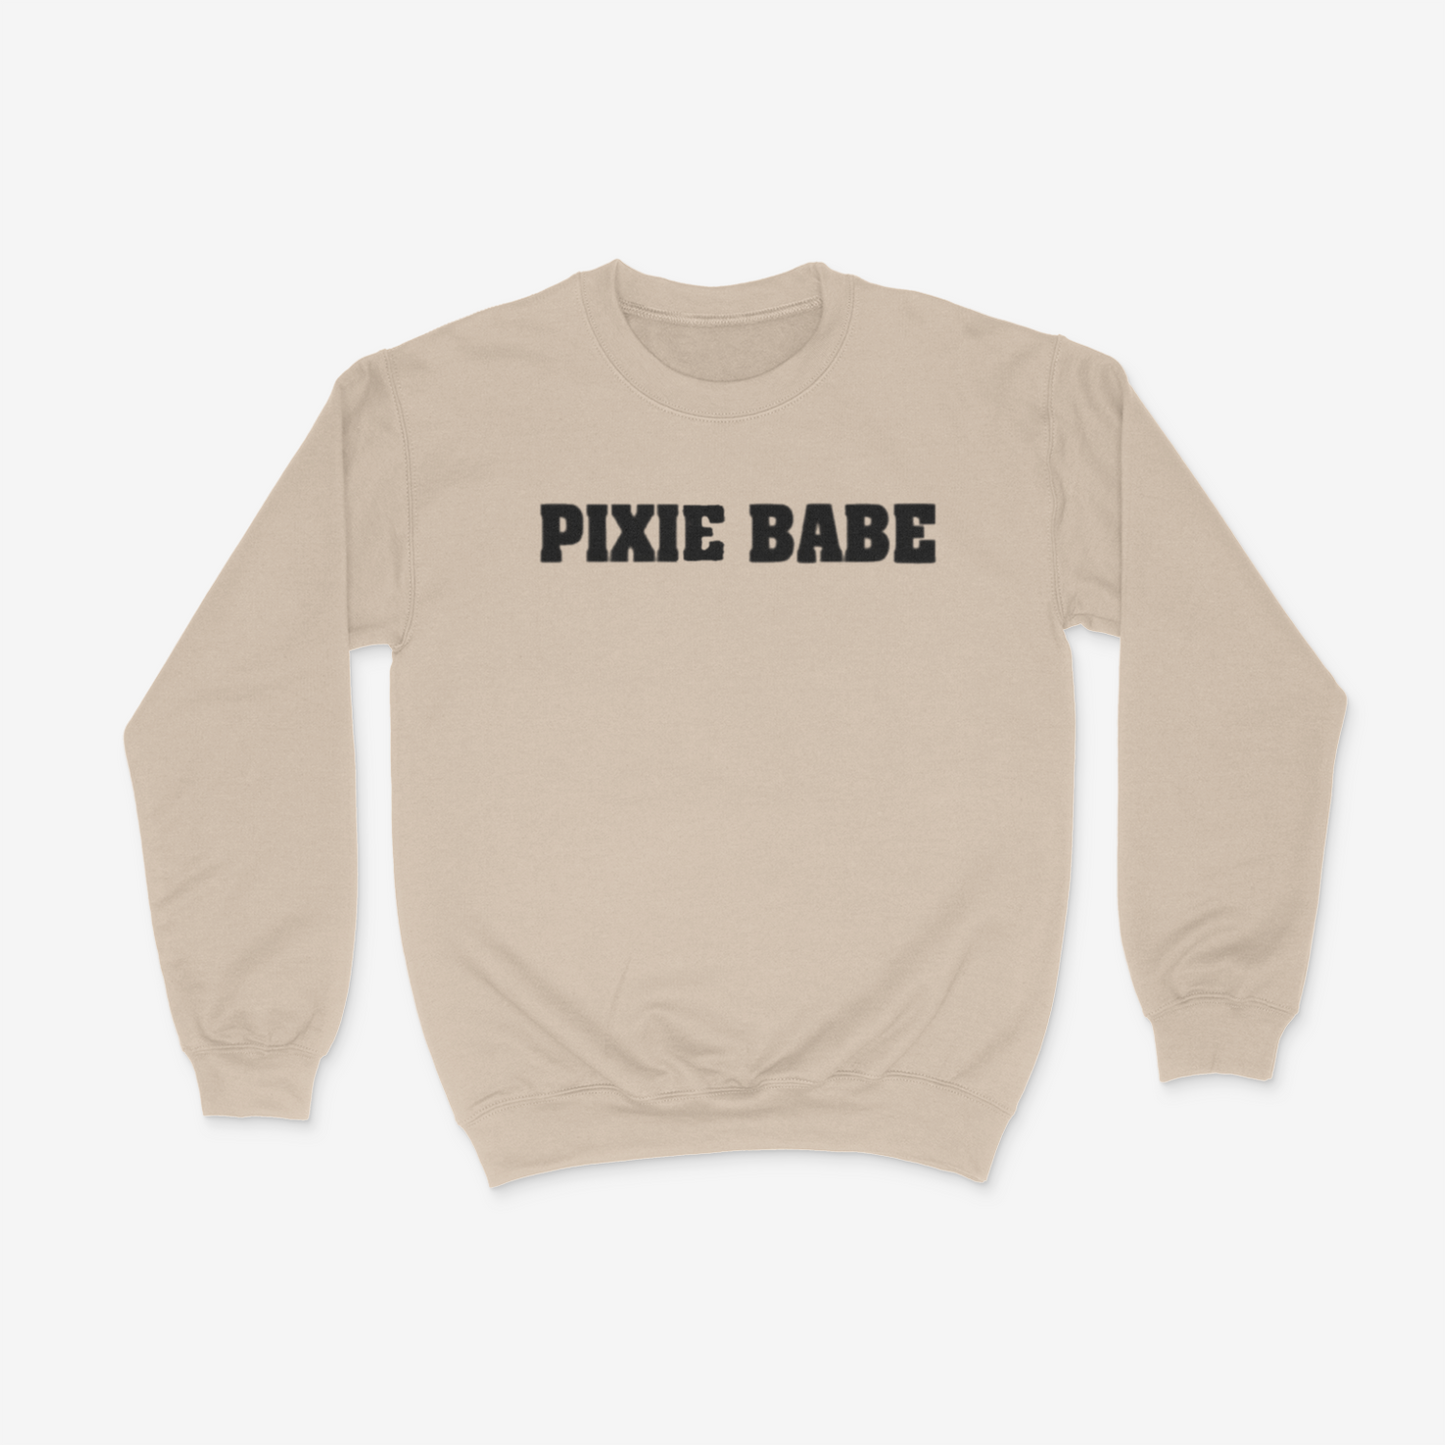 Pixie Babe Crewneck (Black)